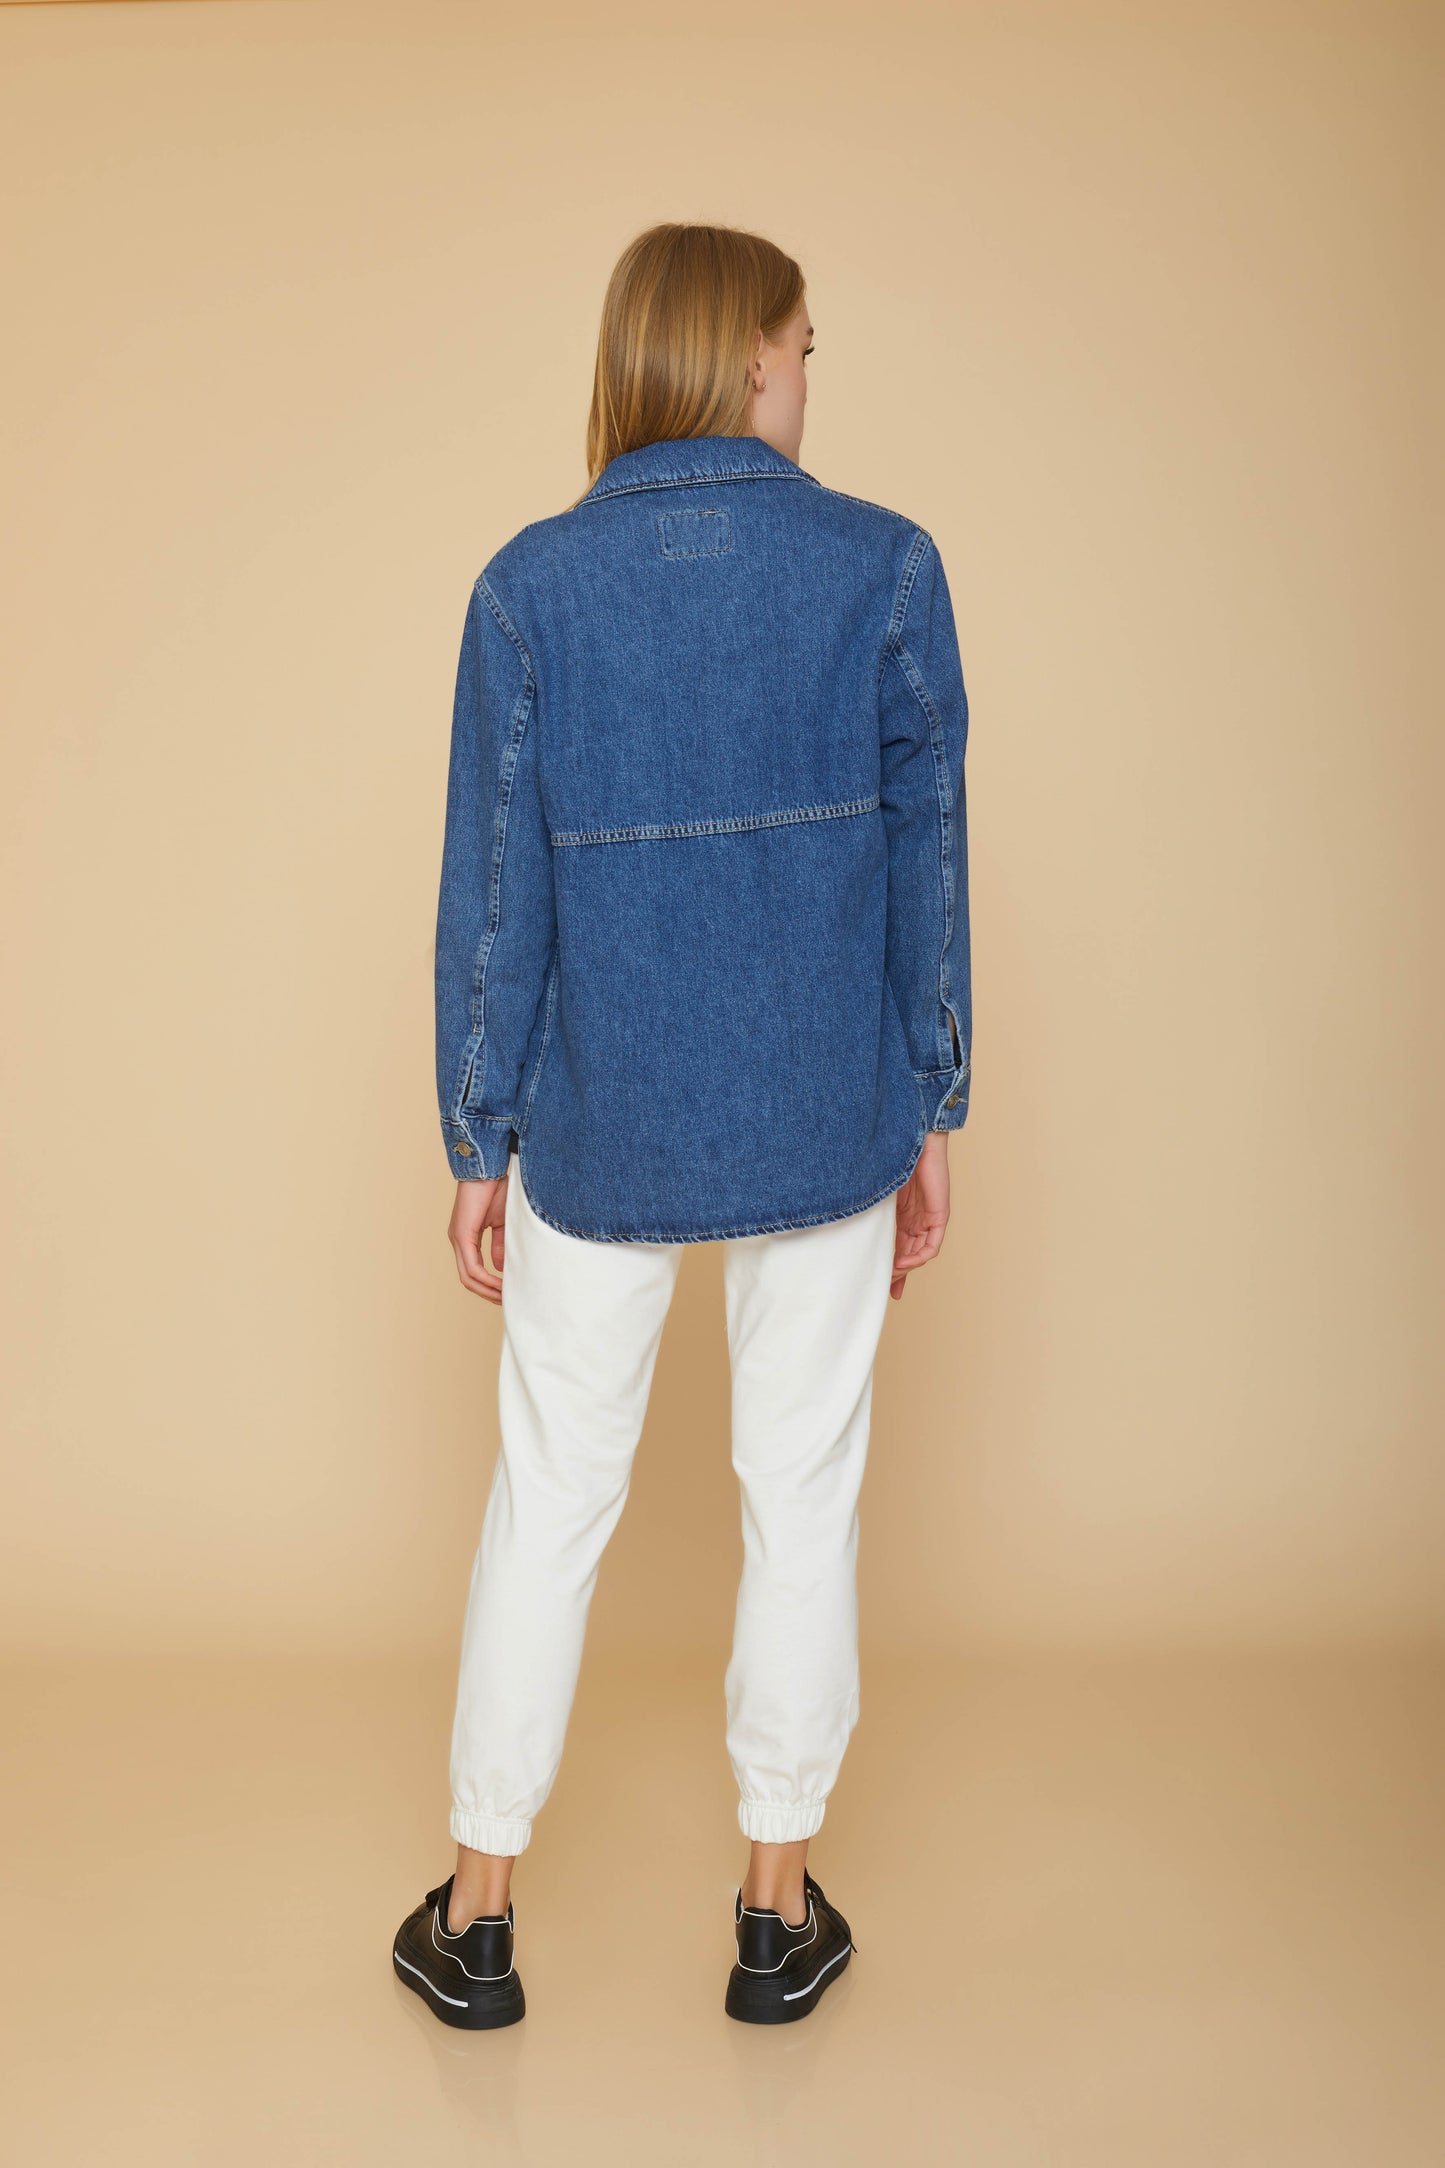 Jeans jacket - wide (chest pocket)